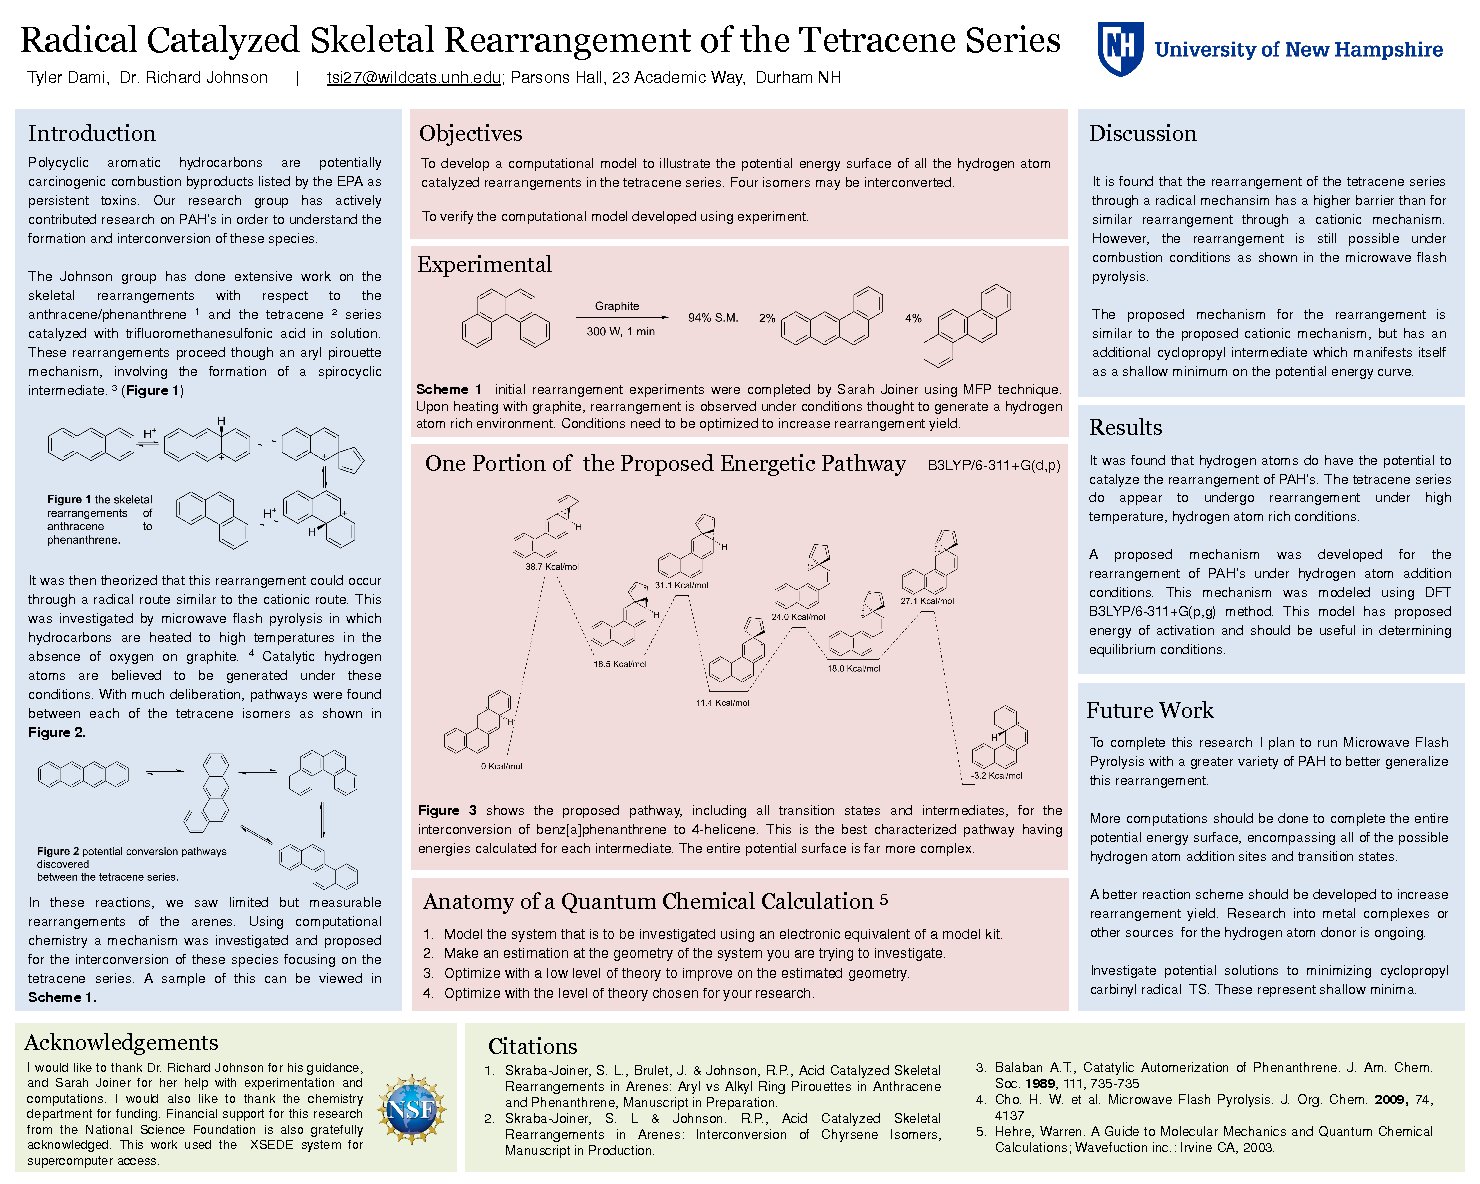 Radical Catalyzed Skeletal Rearrangement Of The Tetracene Series by tsi27